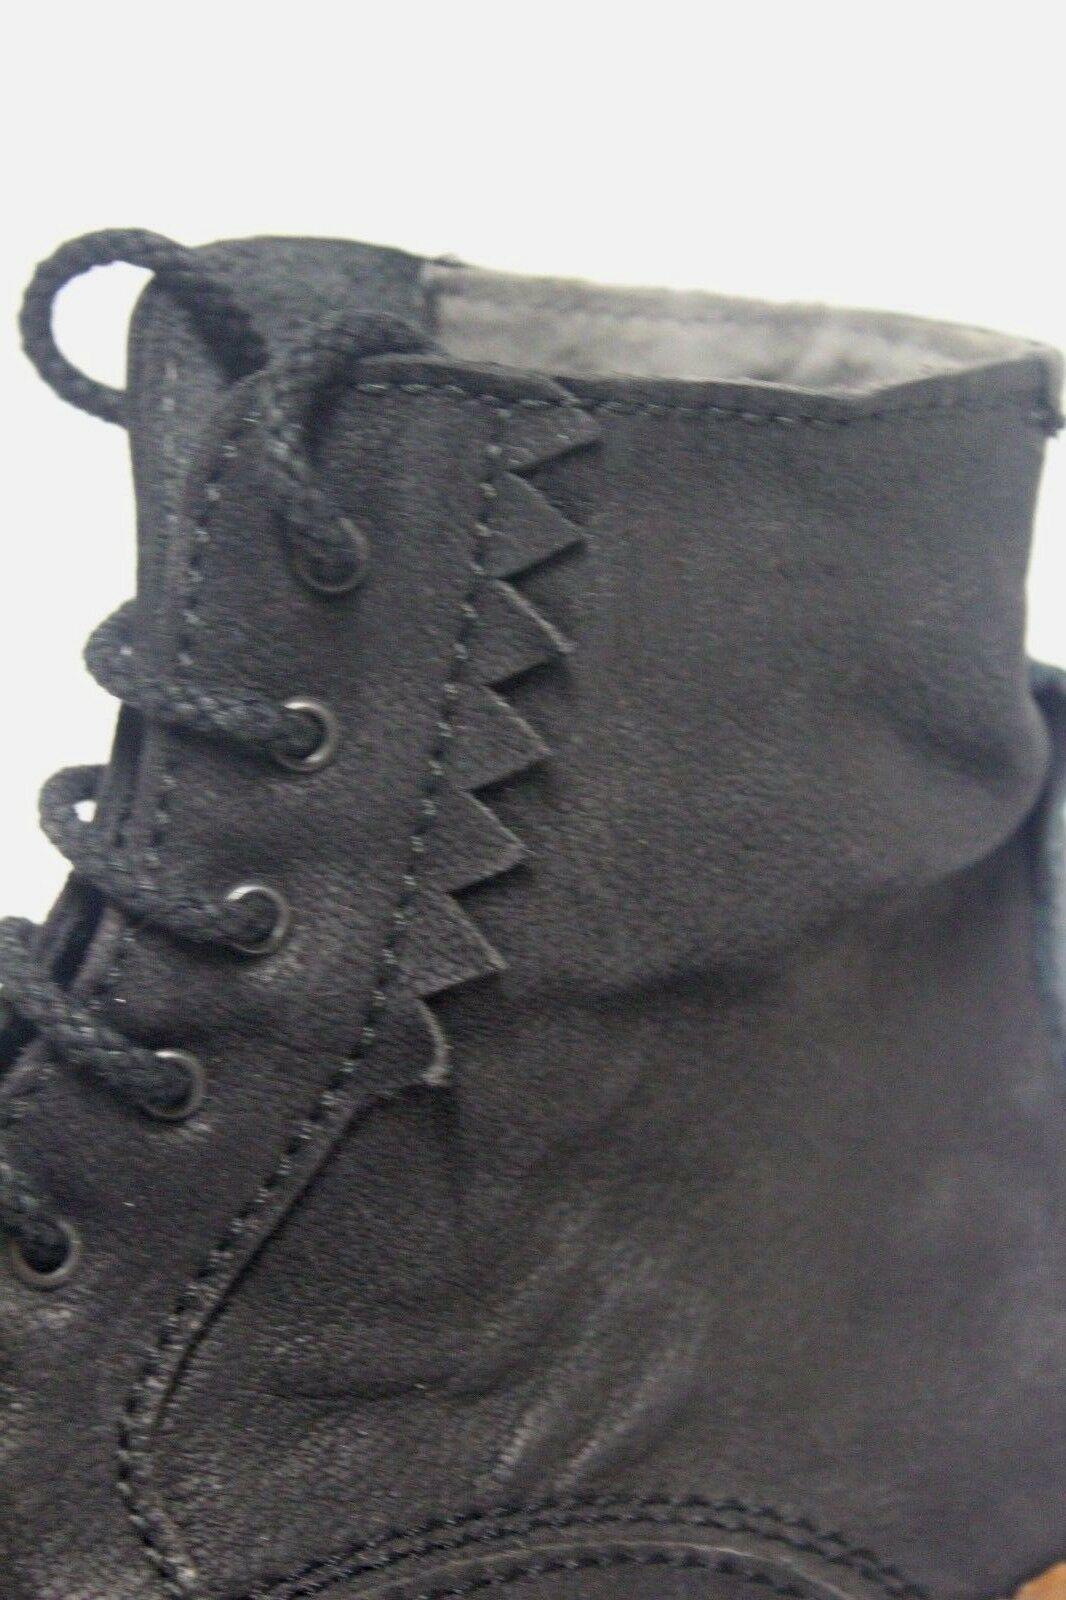 Northern Cobbler Leather Boots Filefish  Black Mens Size EU 41 - SVNYFancy